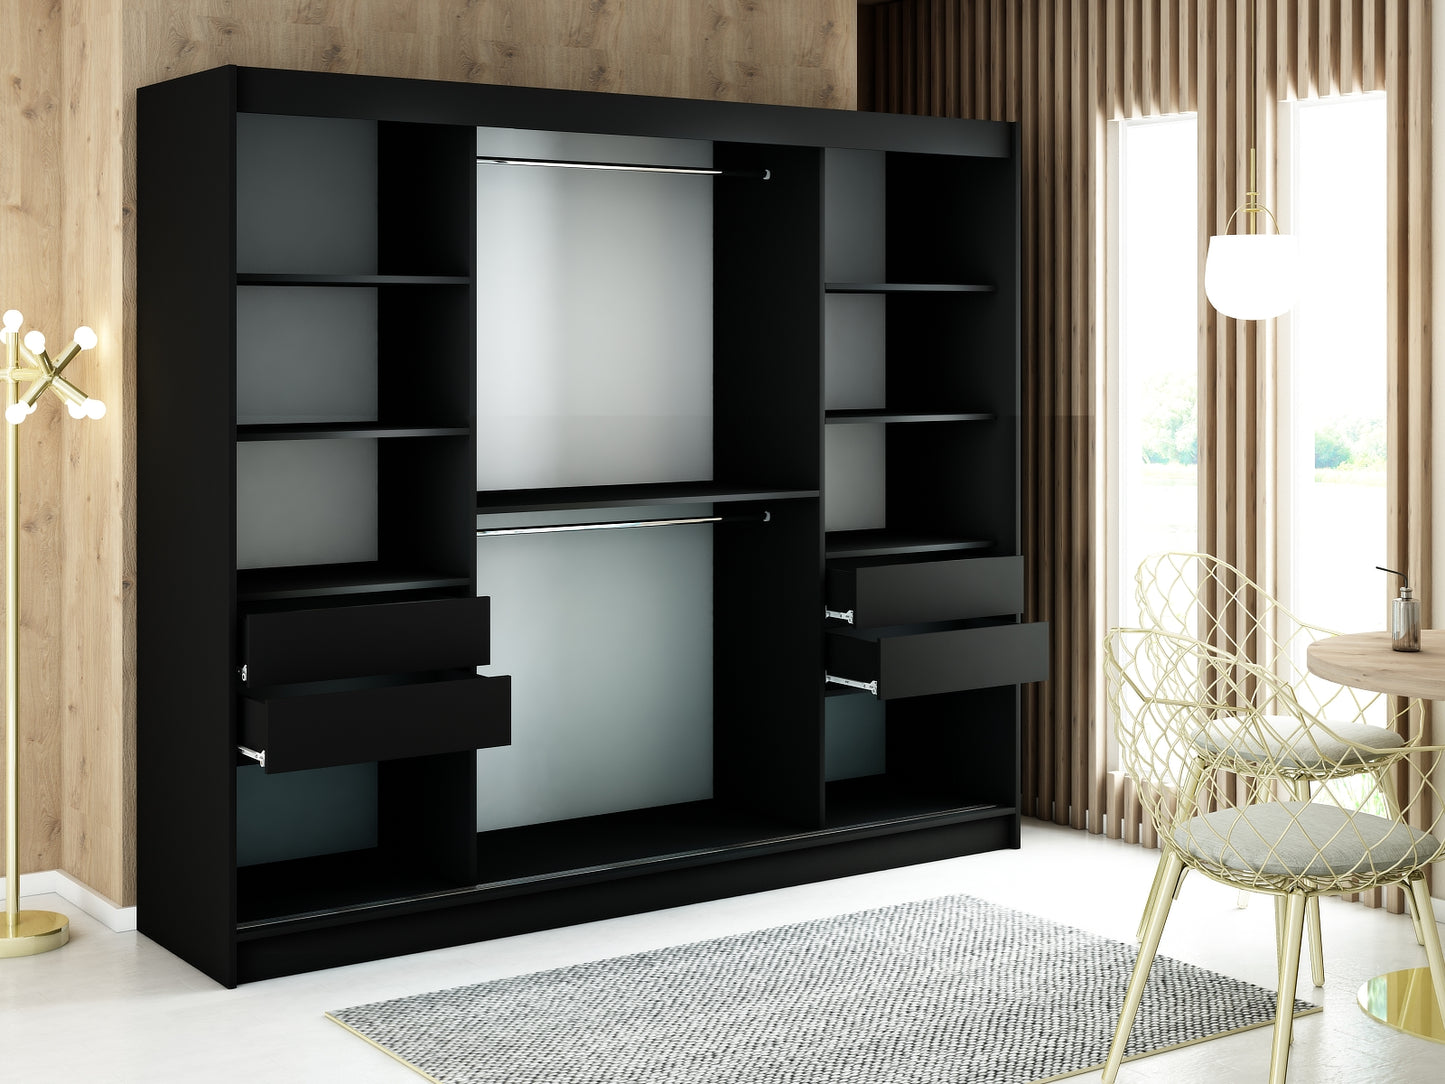 MALI V2 - Sliding Wardrobe Black with Mirror Gold Details Shelves Rails Drawers Optional, FREE ASSEMBLY INCL >250cm<